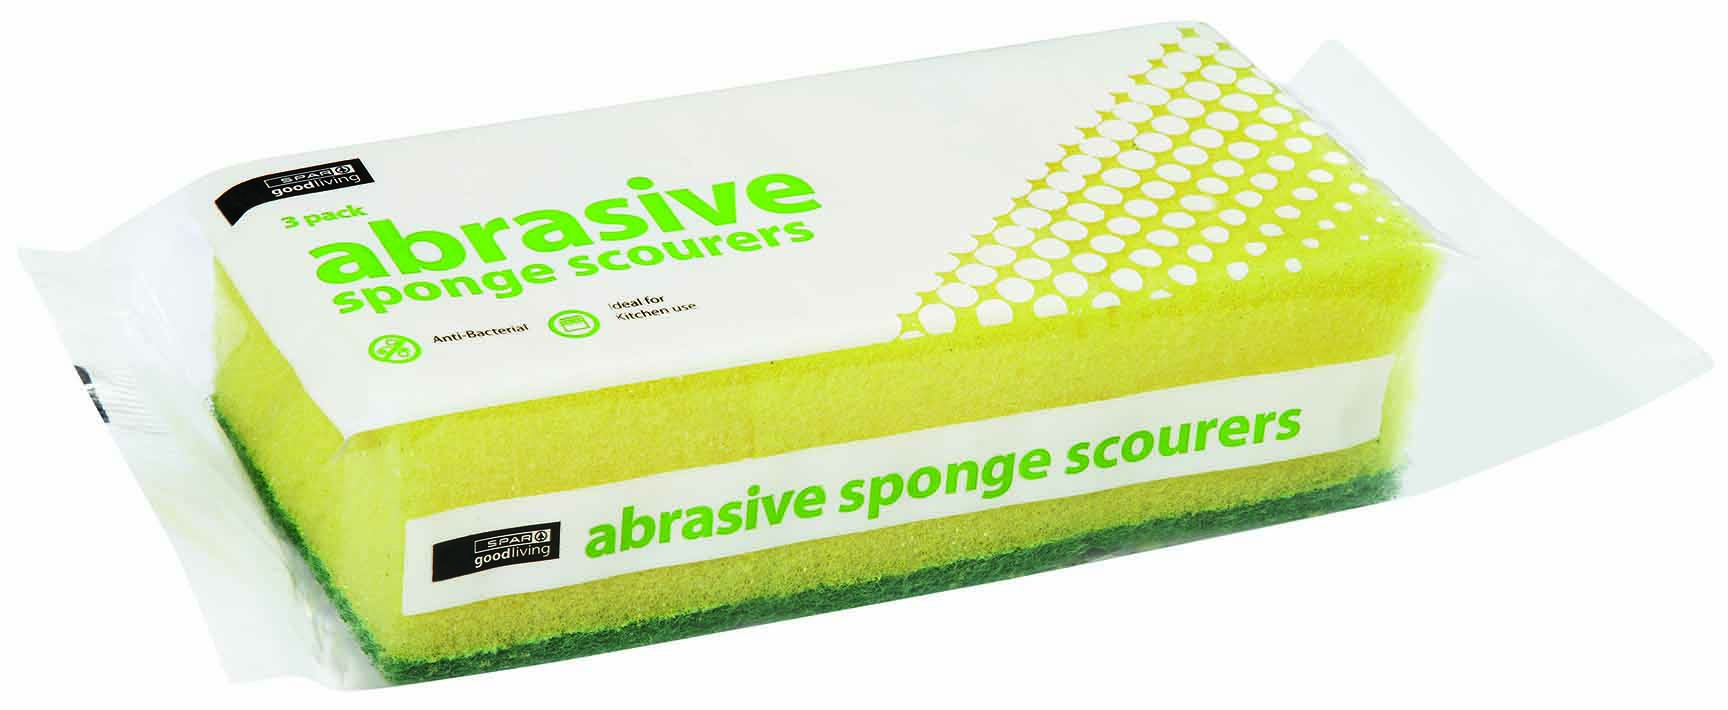 sponge scourers abrasive - 3 pack